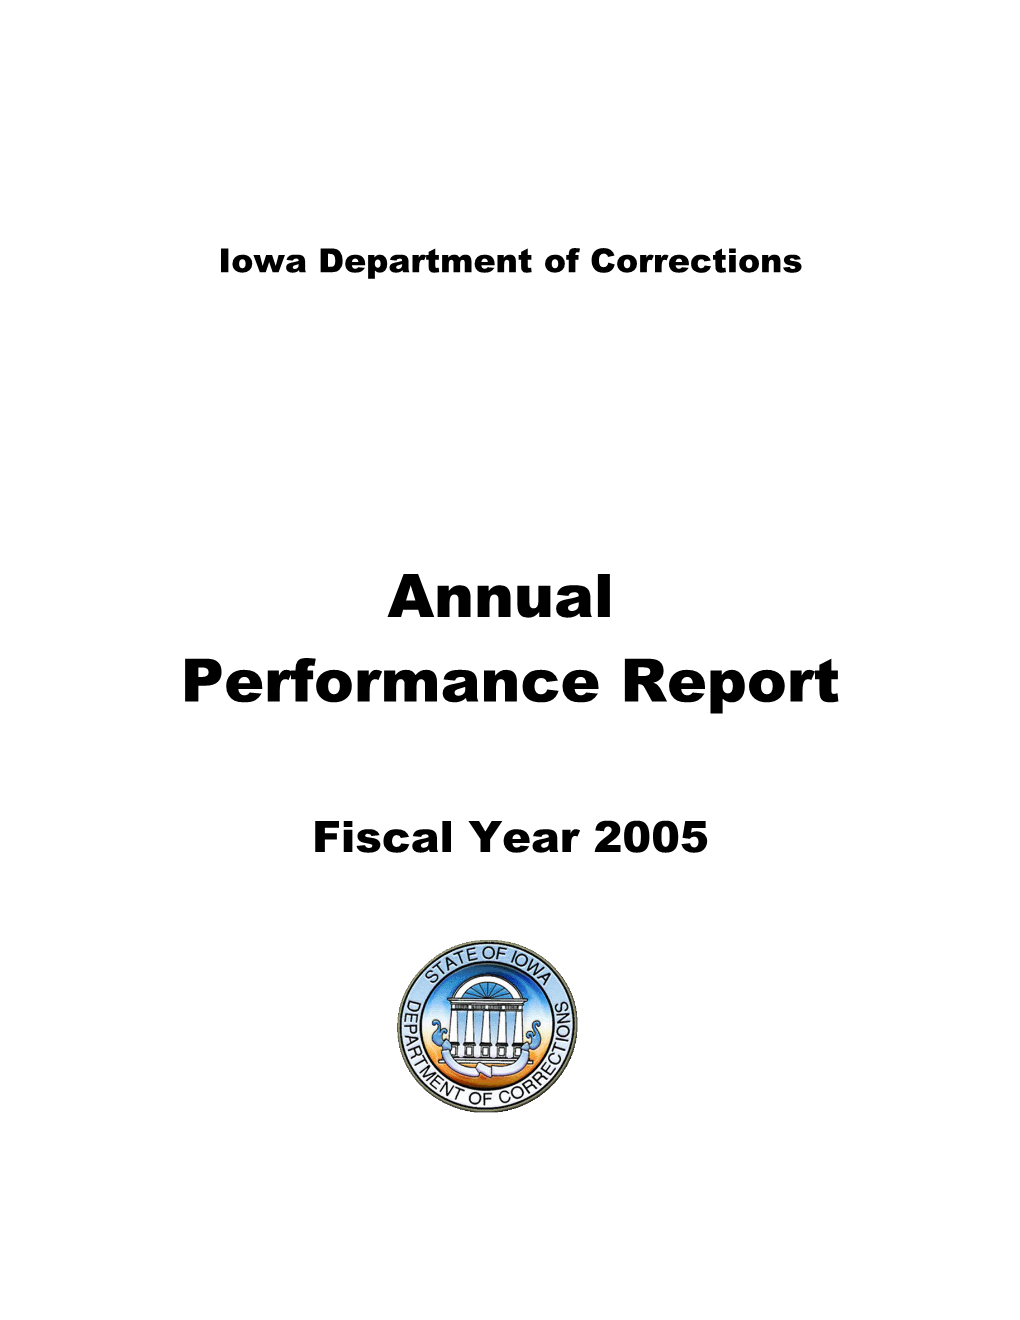 Iowa Department Of Corrections